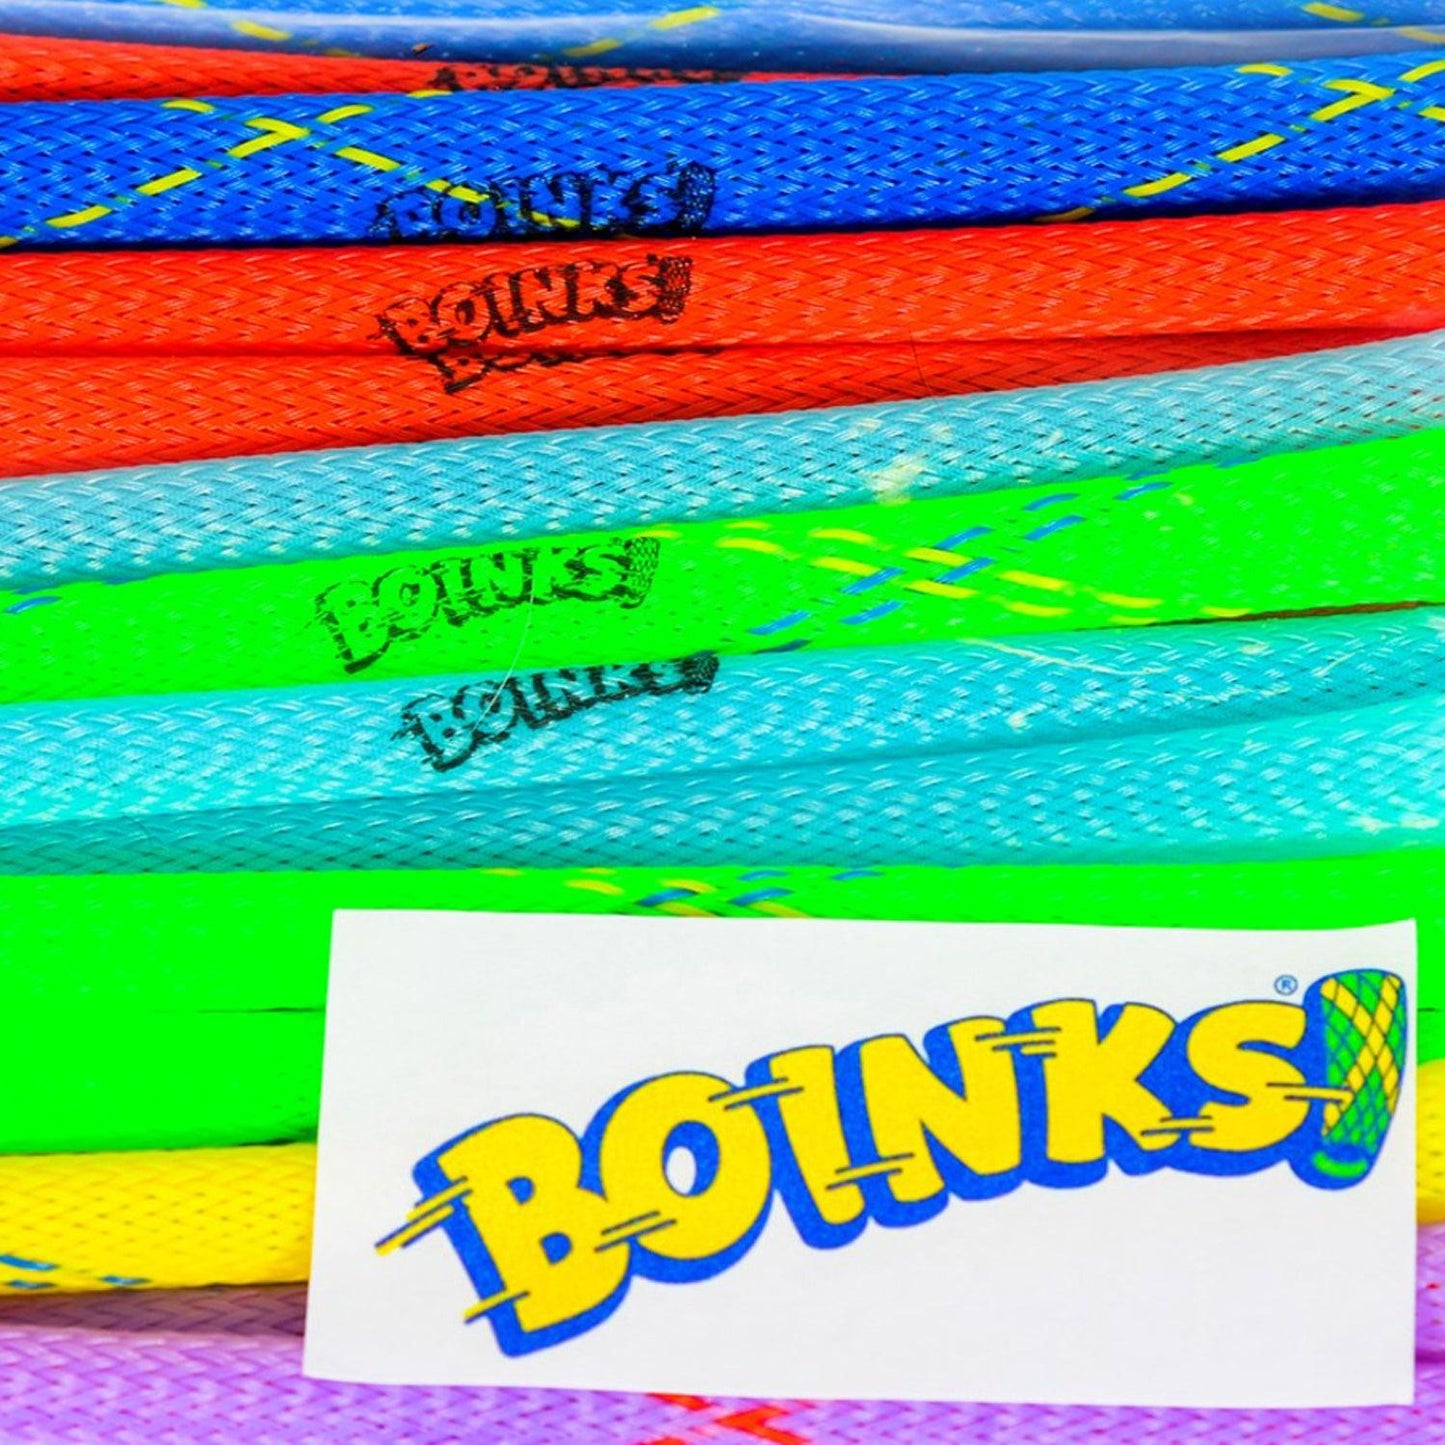 Boinks®, Pack of 28 - Loomini